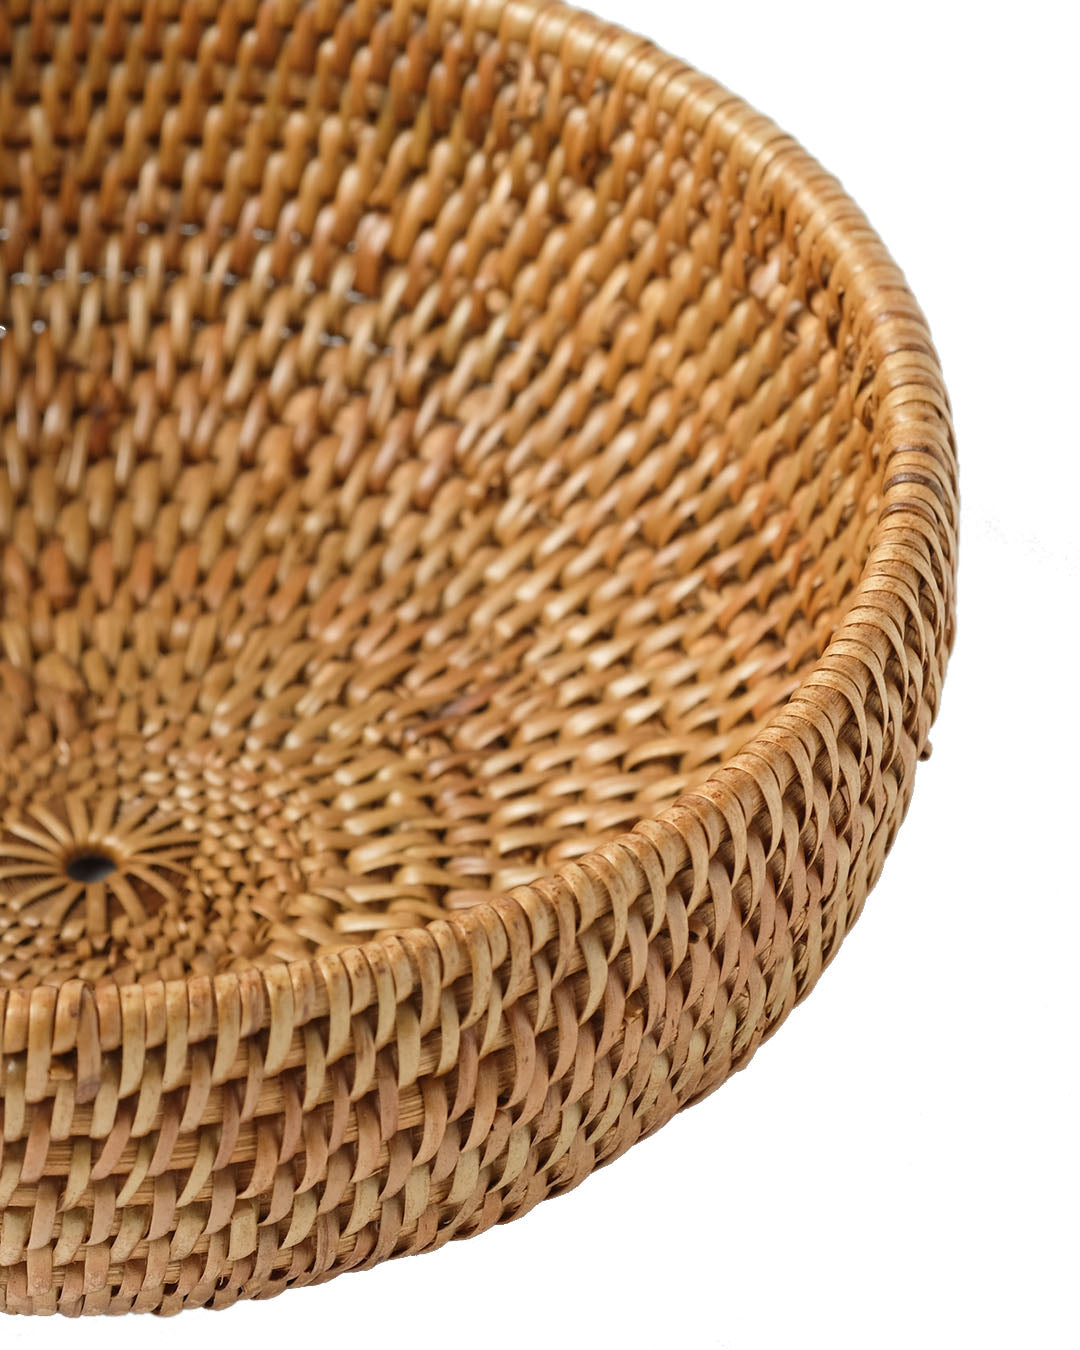 Cesta de ratán 100% natural Saparua decorativa redonda, hecho a mano artesanal, acabado natural de 15 cm de diámetro fabricado en Indonesia